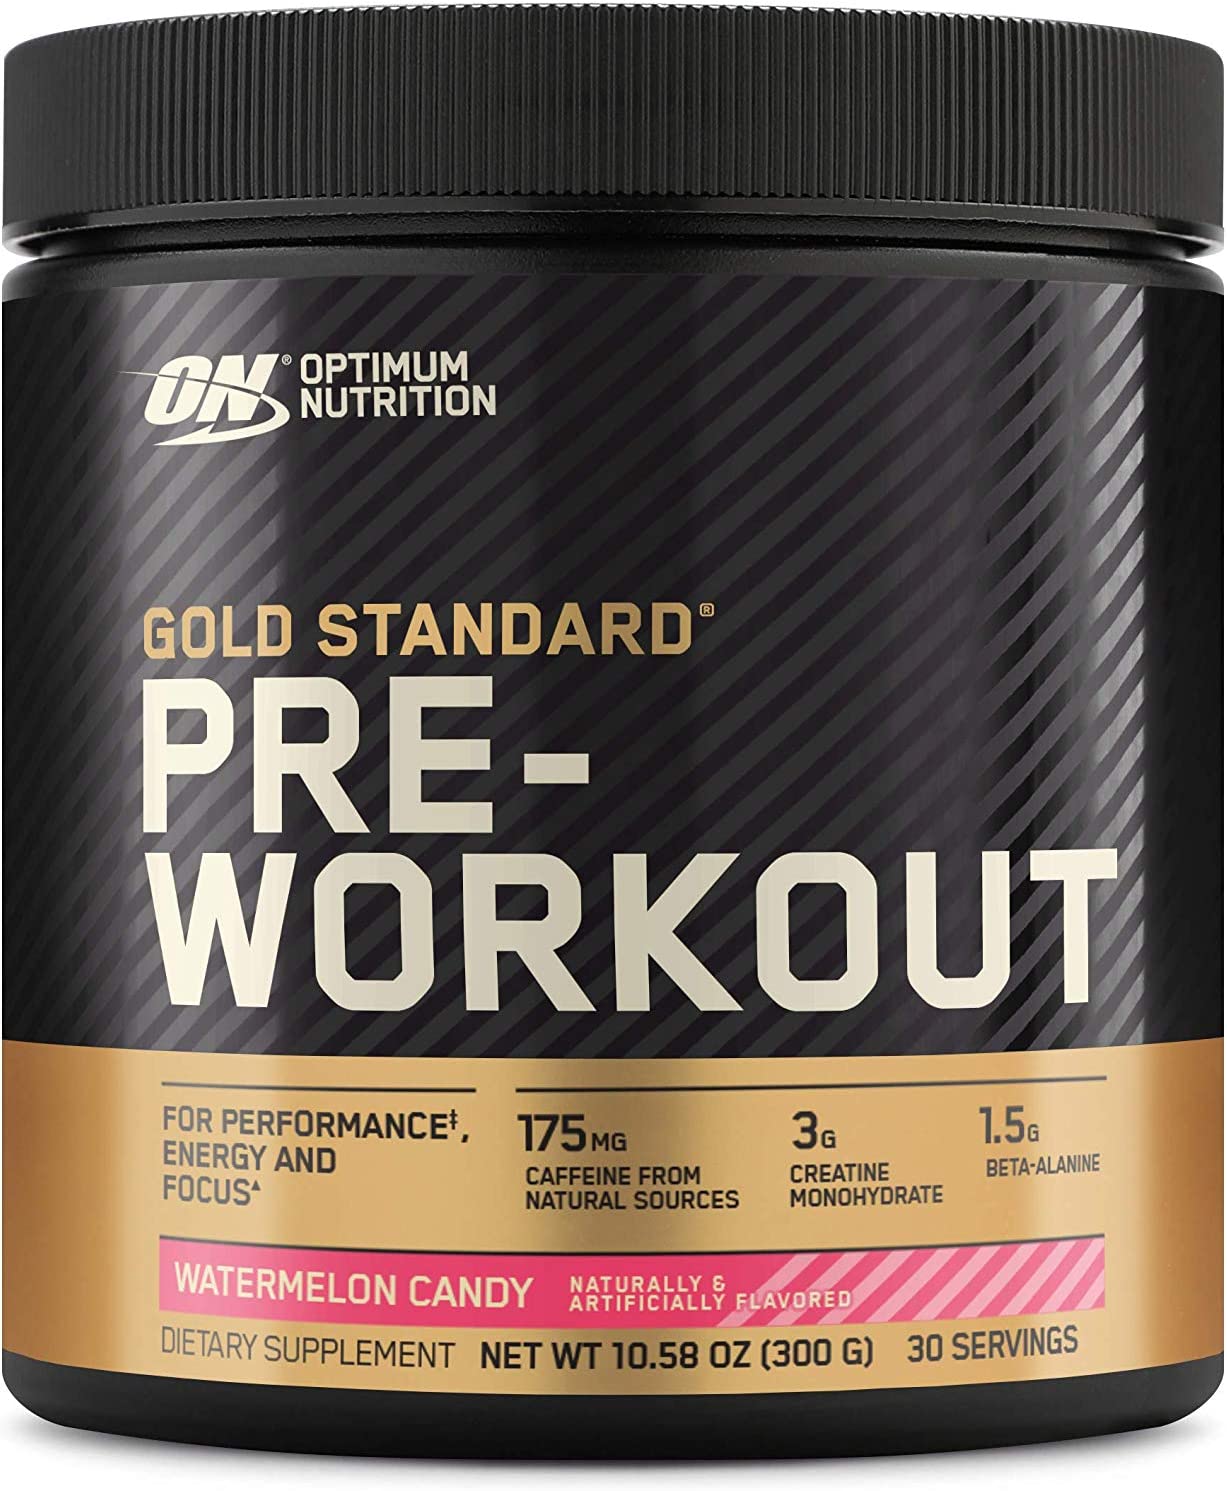 C4 Original pre workout supplement